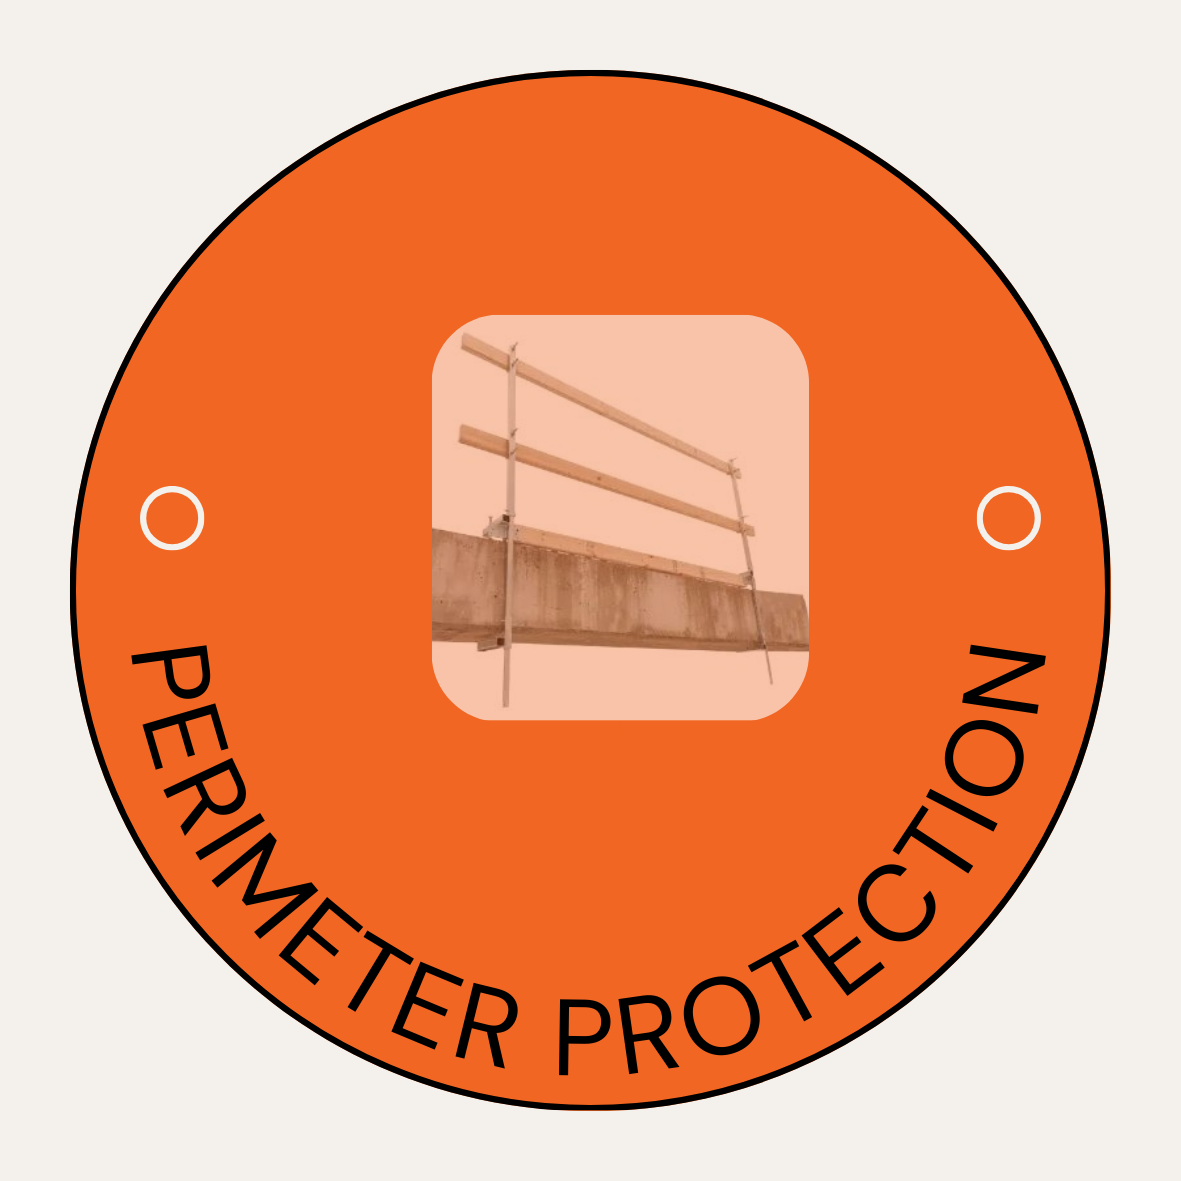 Perimeter Protection